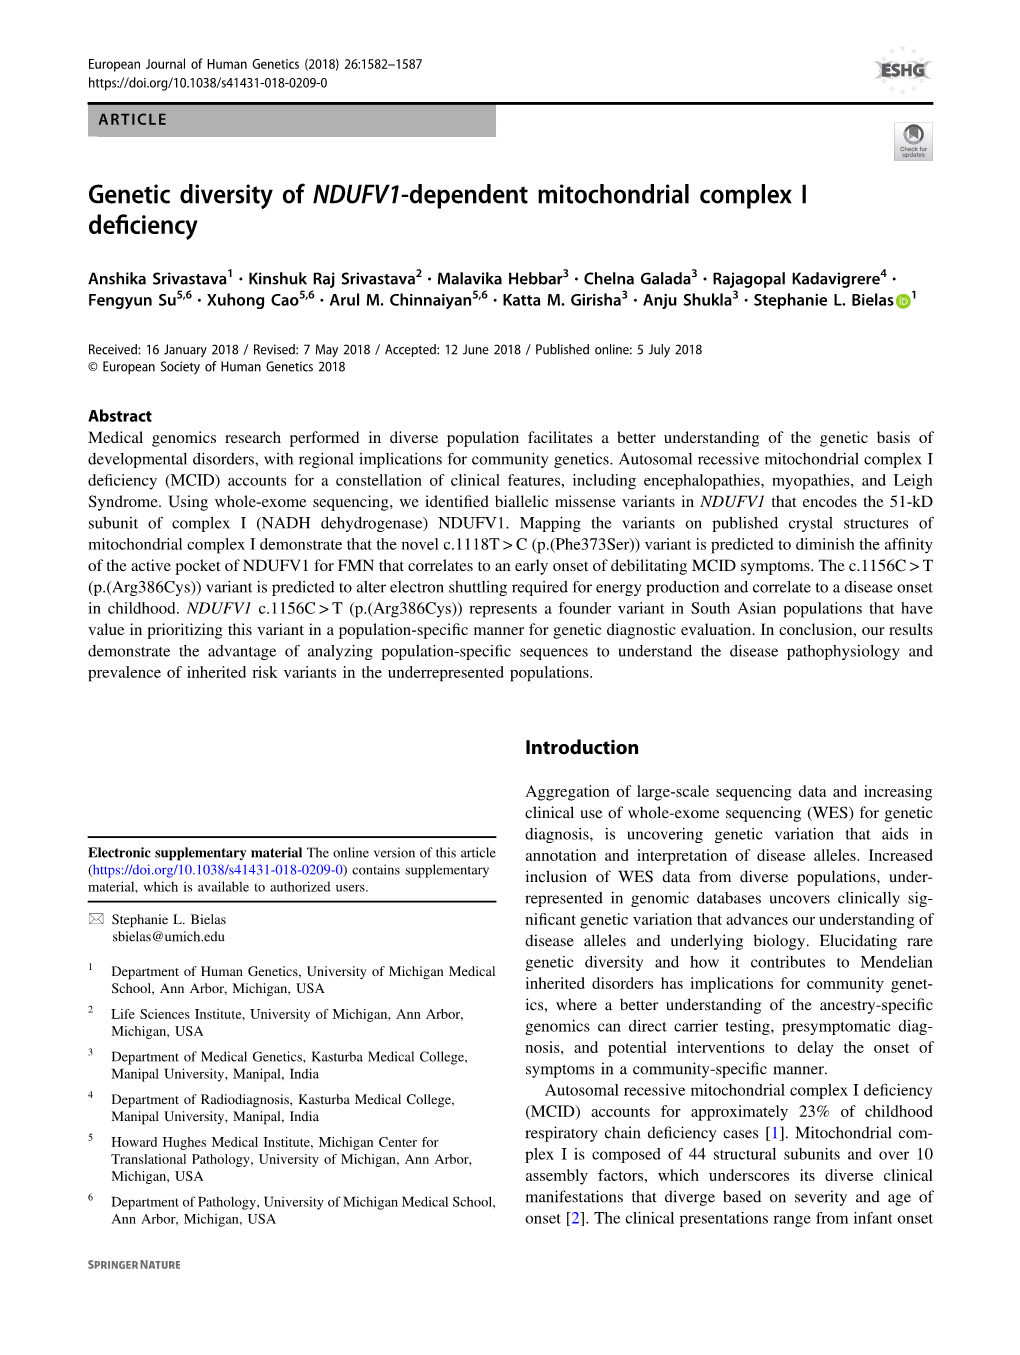 Genetic Diversity of NDUFV1-Dependent Mitochondrial Complex I Deﬁciency